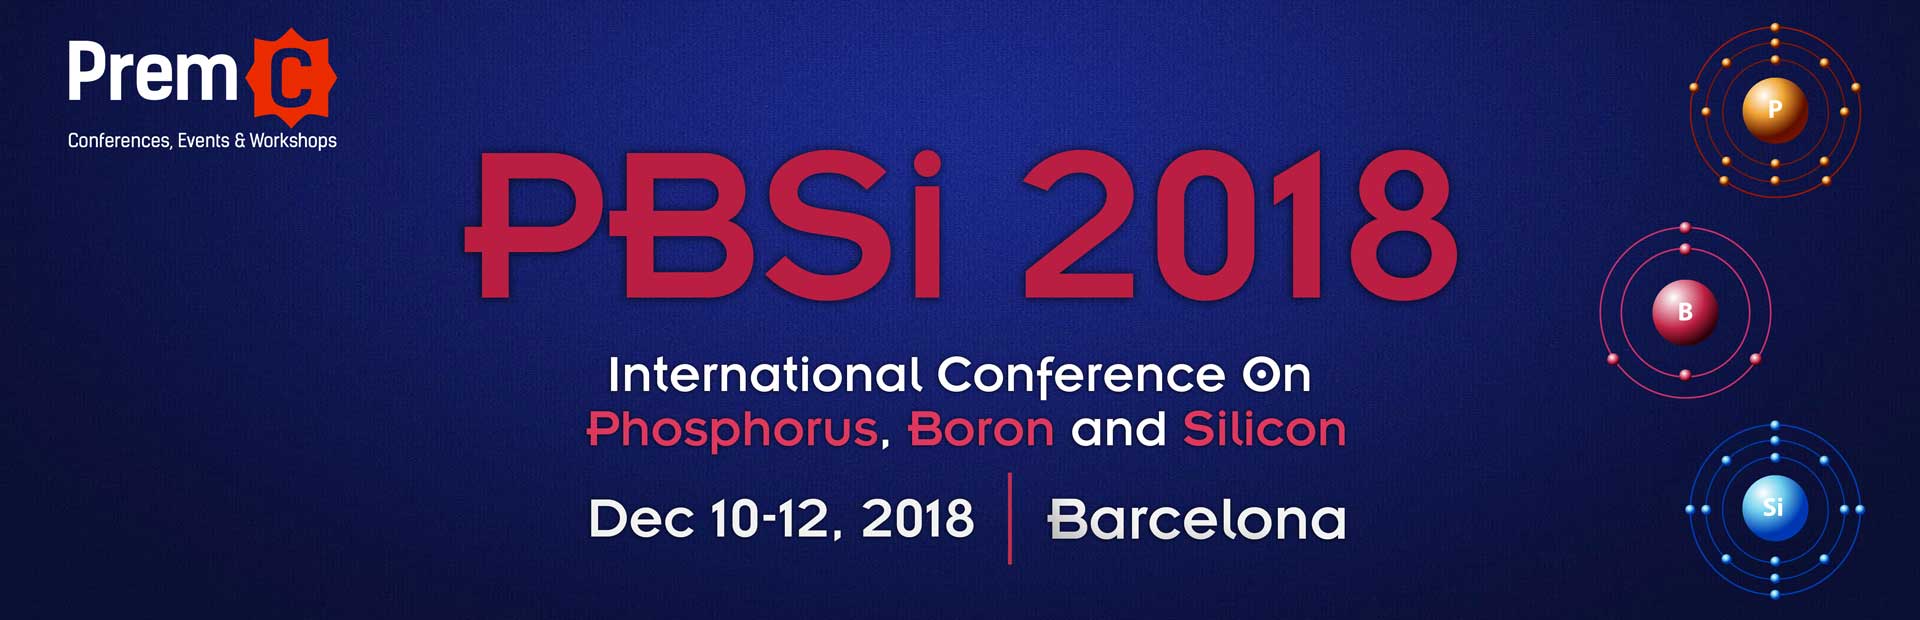 International Conference On Phosphorus, Boron And Silicon - PBSI 2017